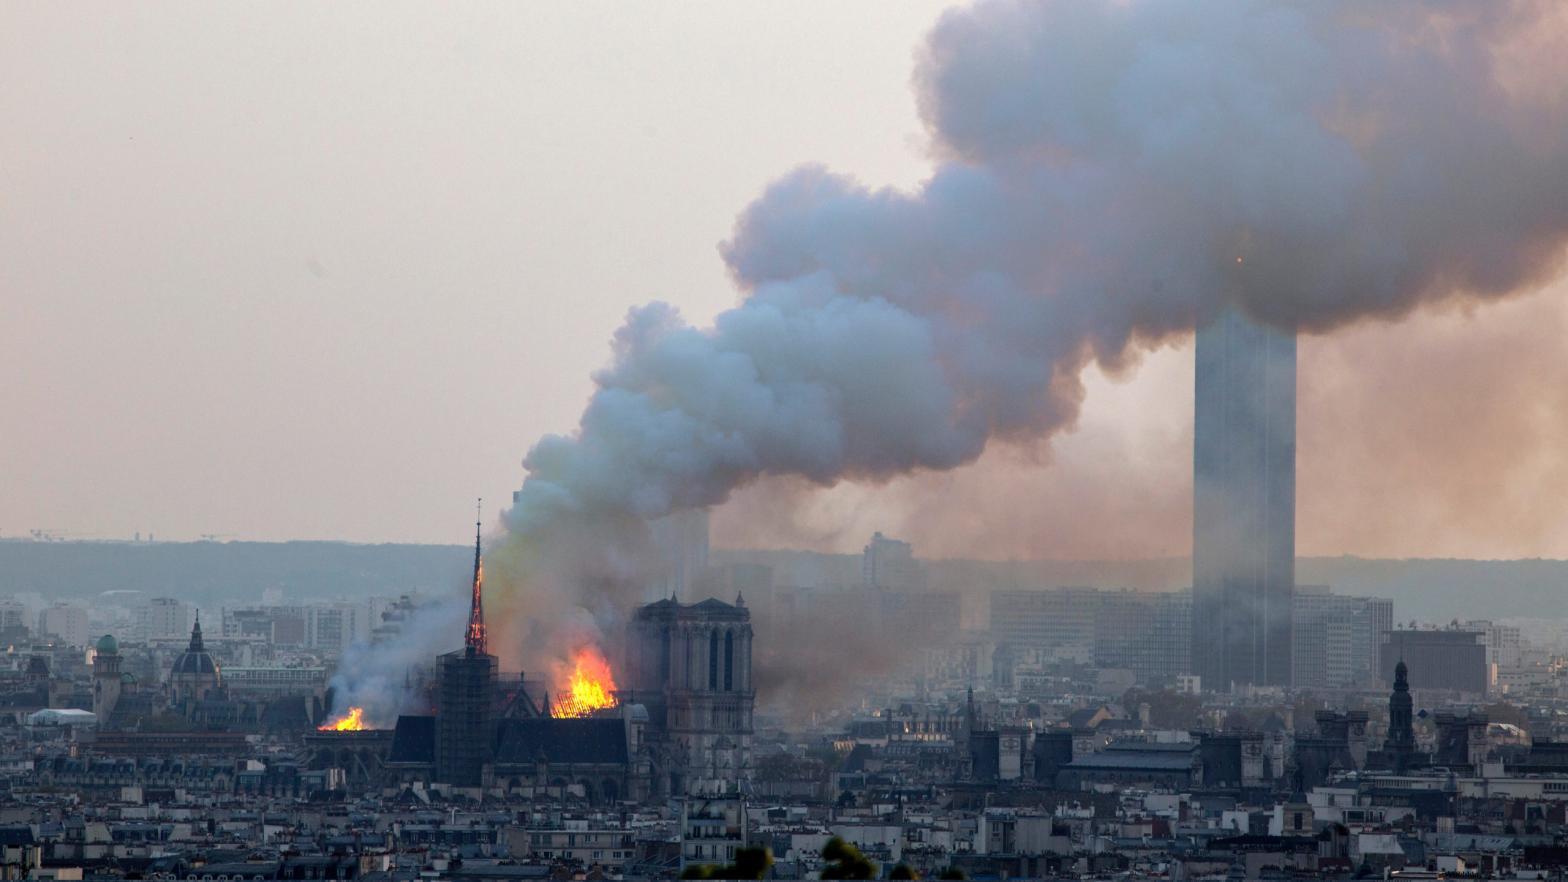 The Notre Dame cathedral burning in Paris on April 15, 2019. (Image: Rafael Yaghobzadeh, AP)